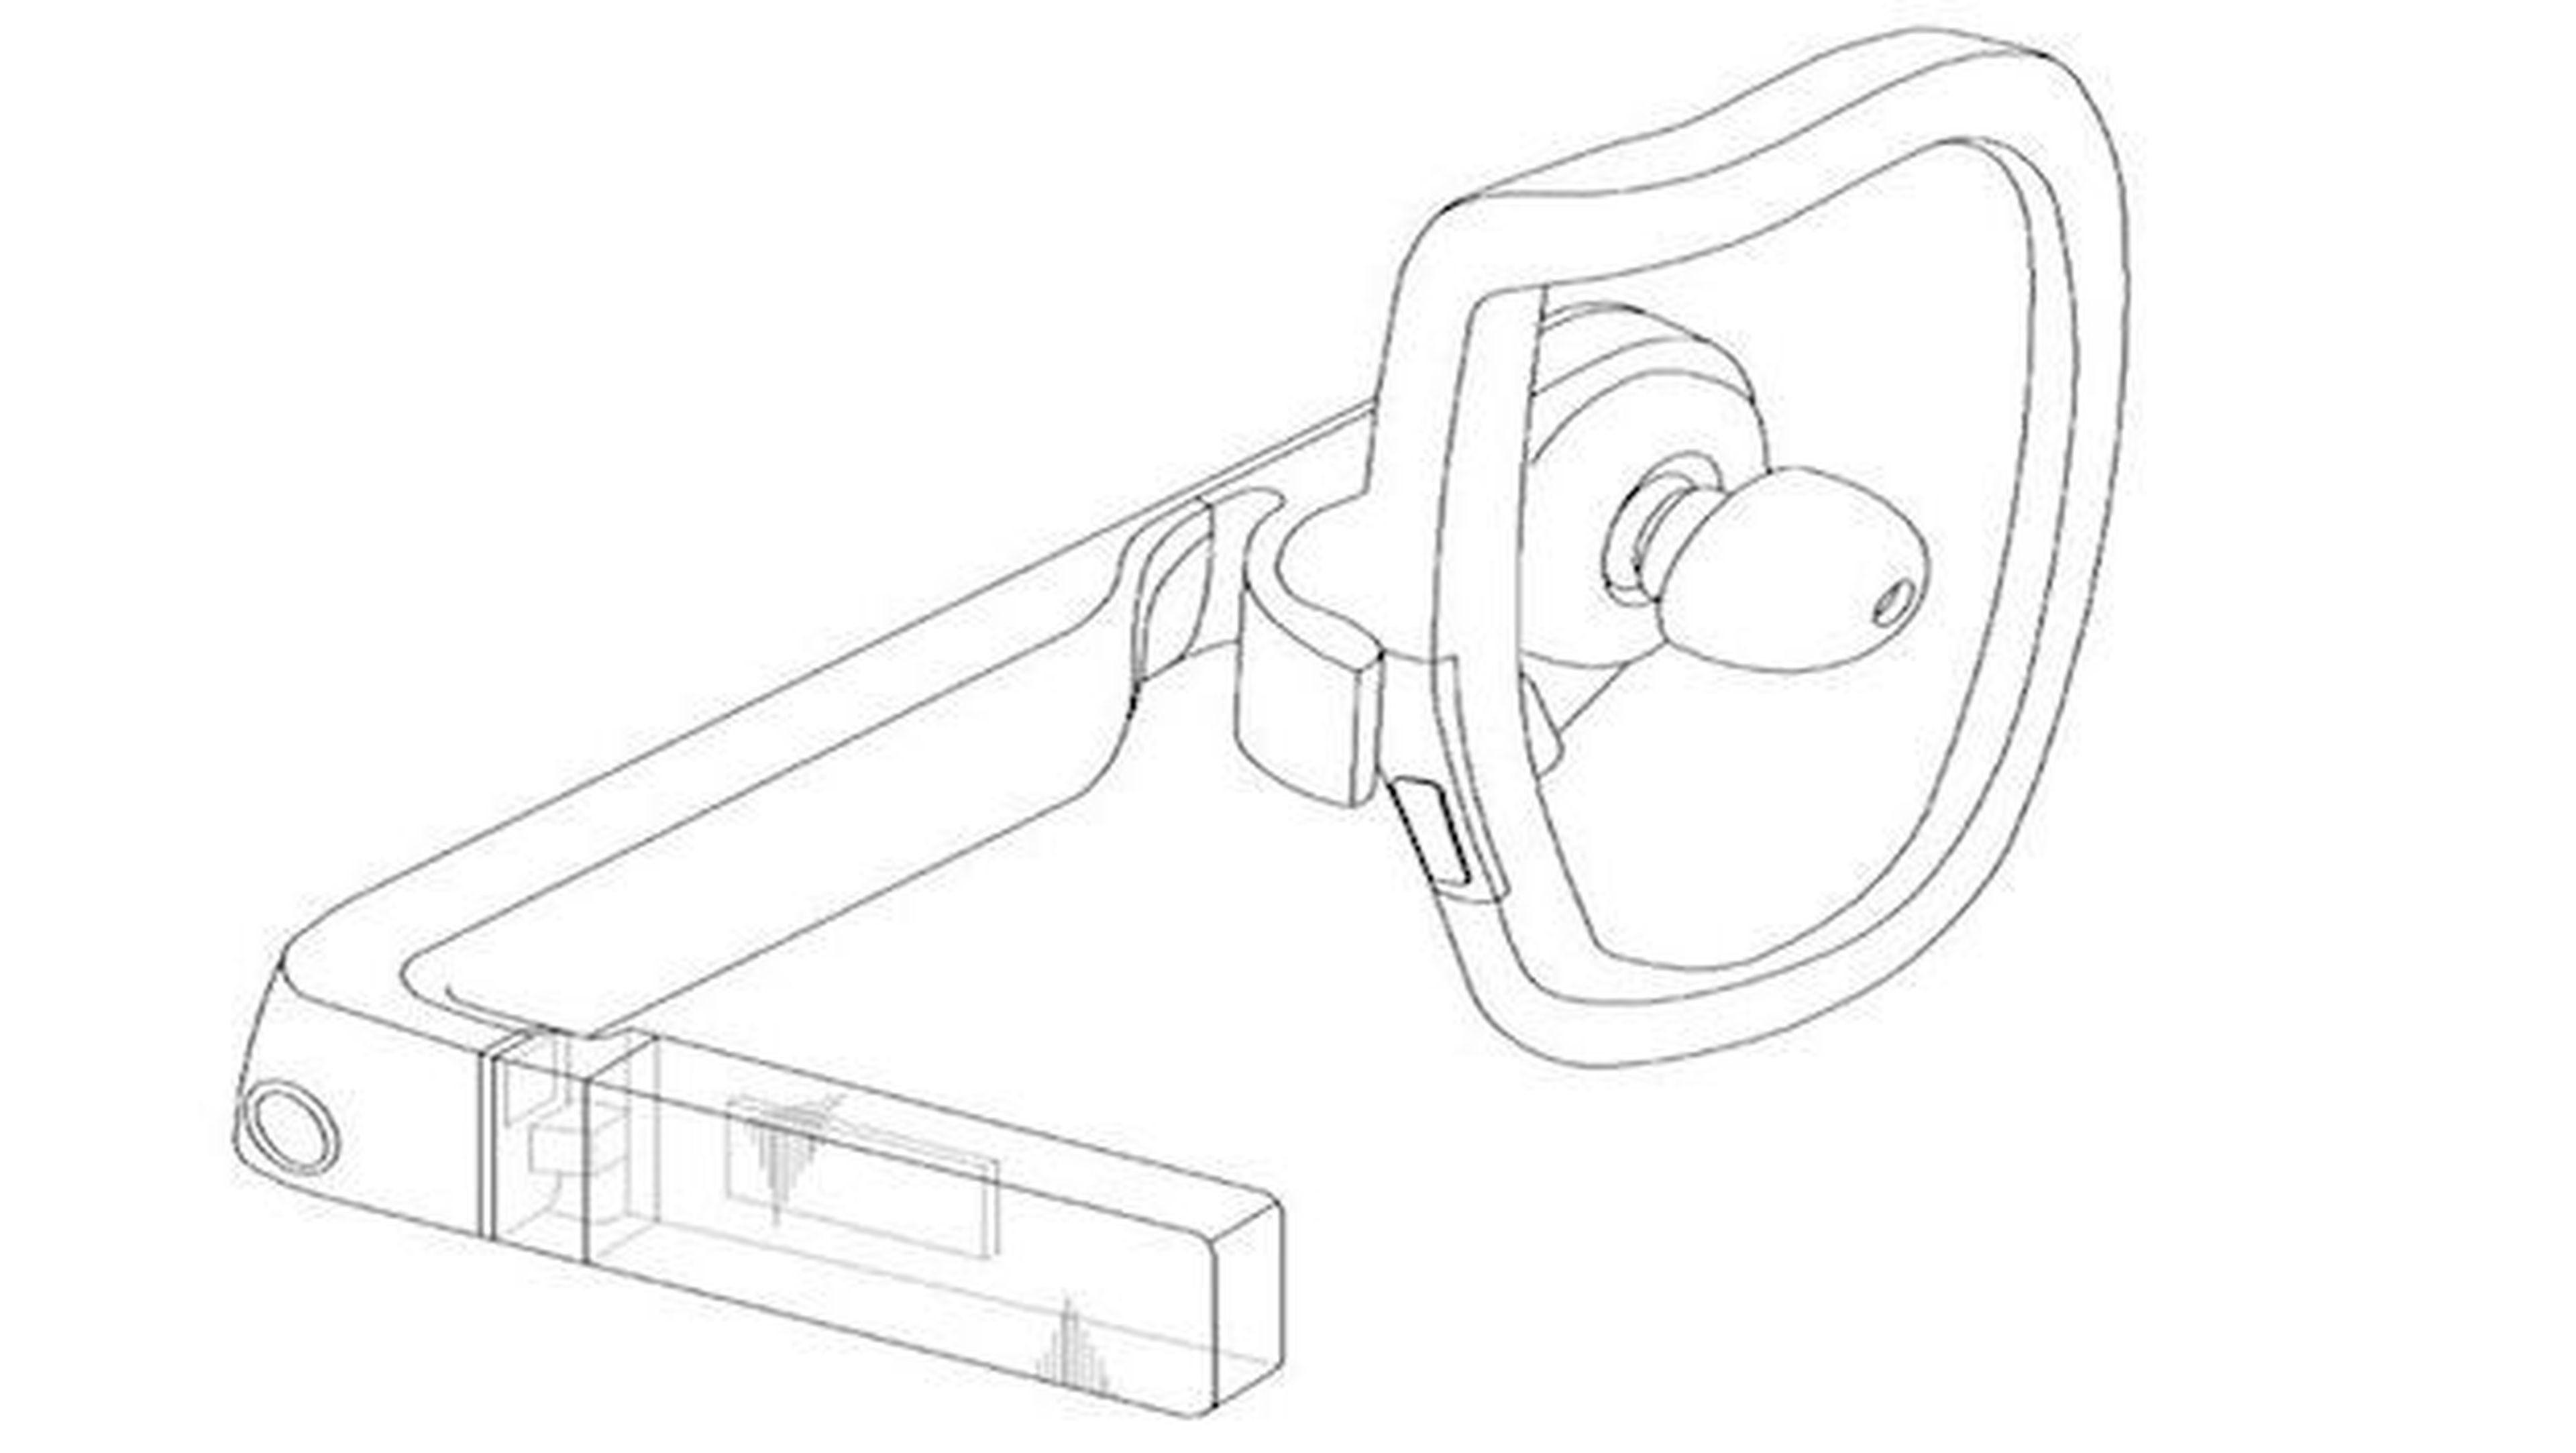 El auricular incluye una pantalla similar a la de Google Glass